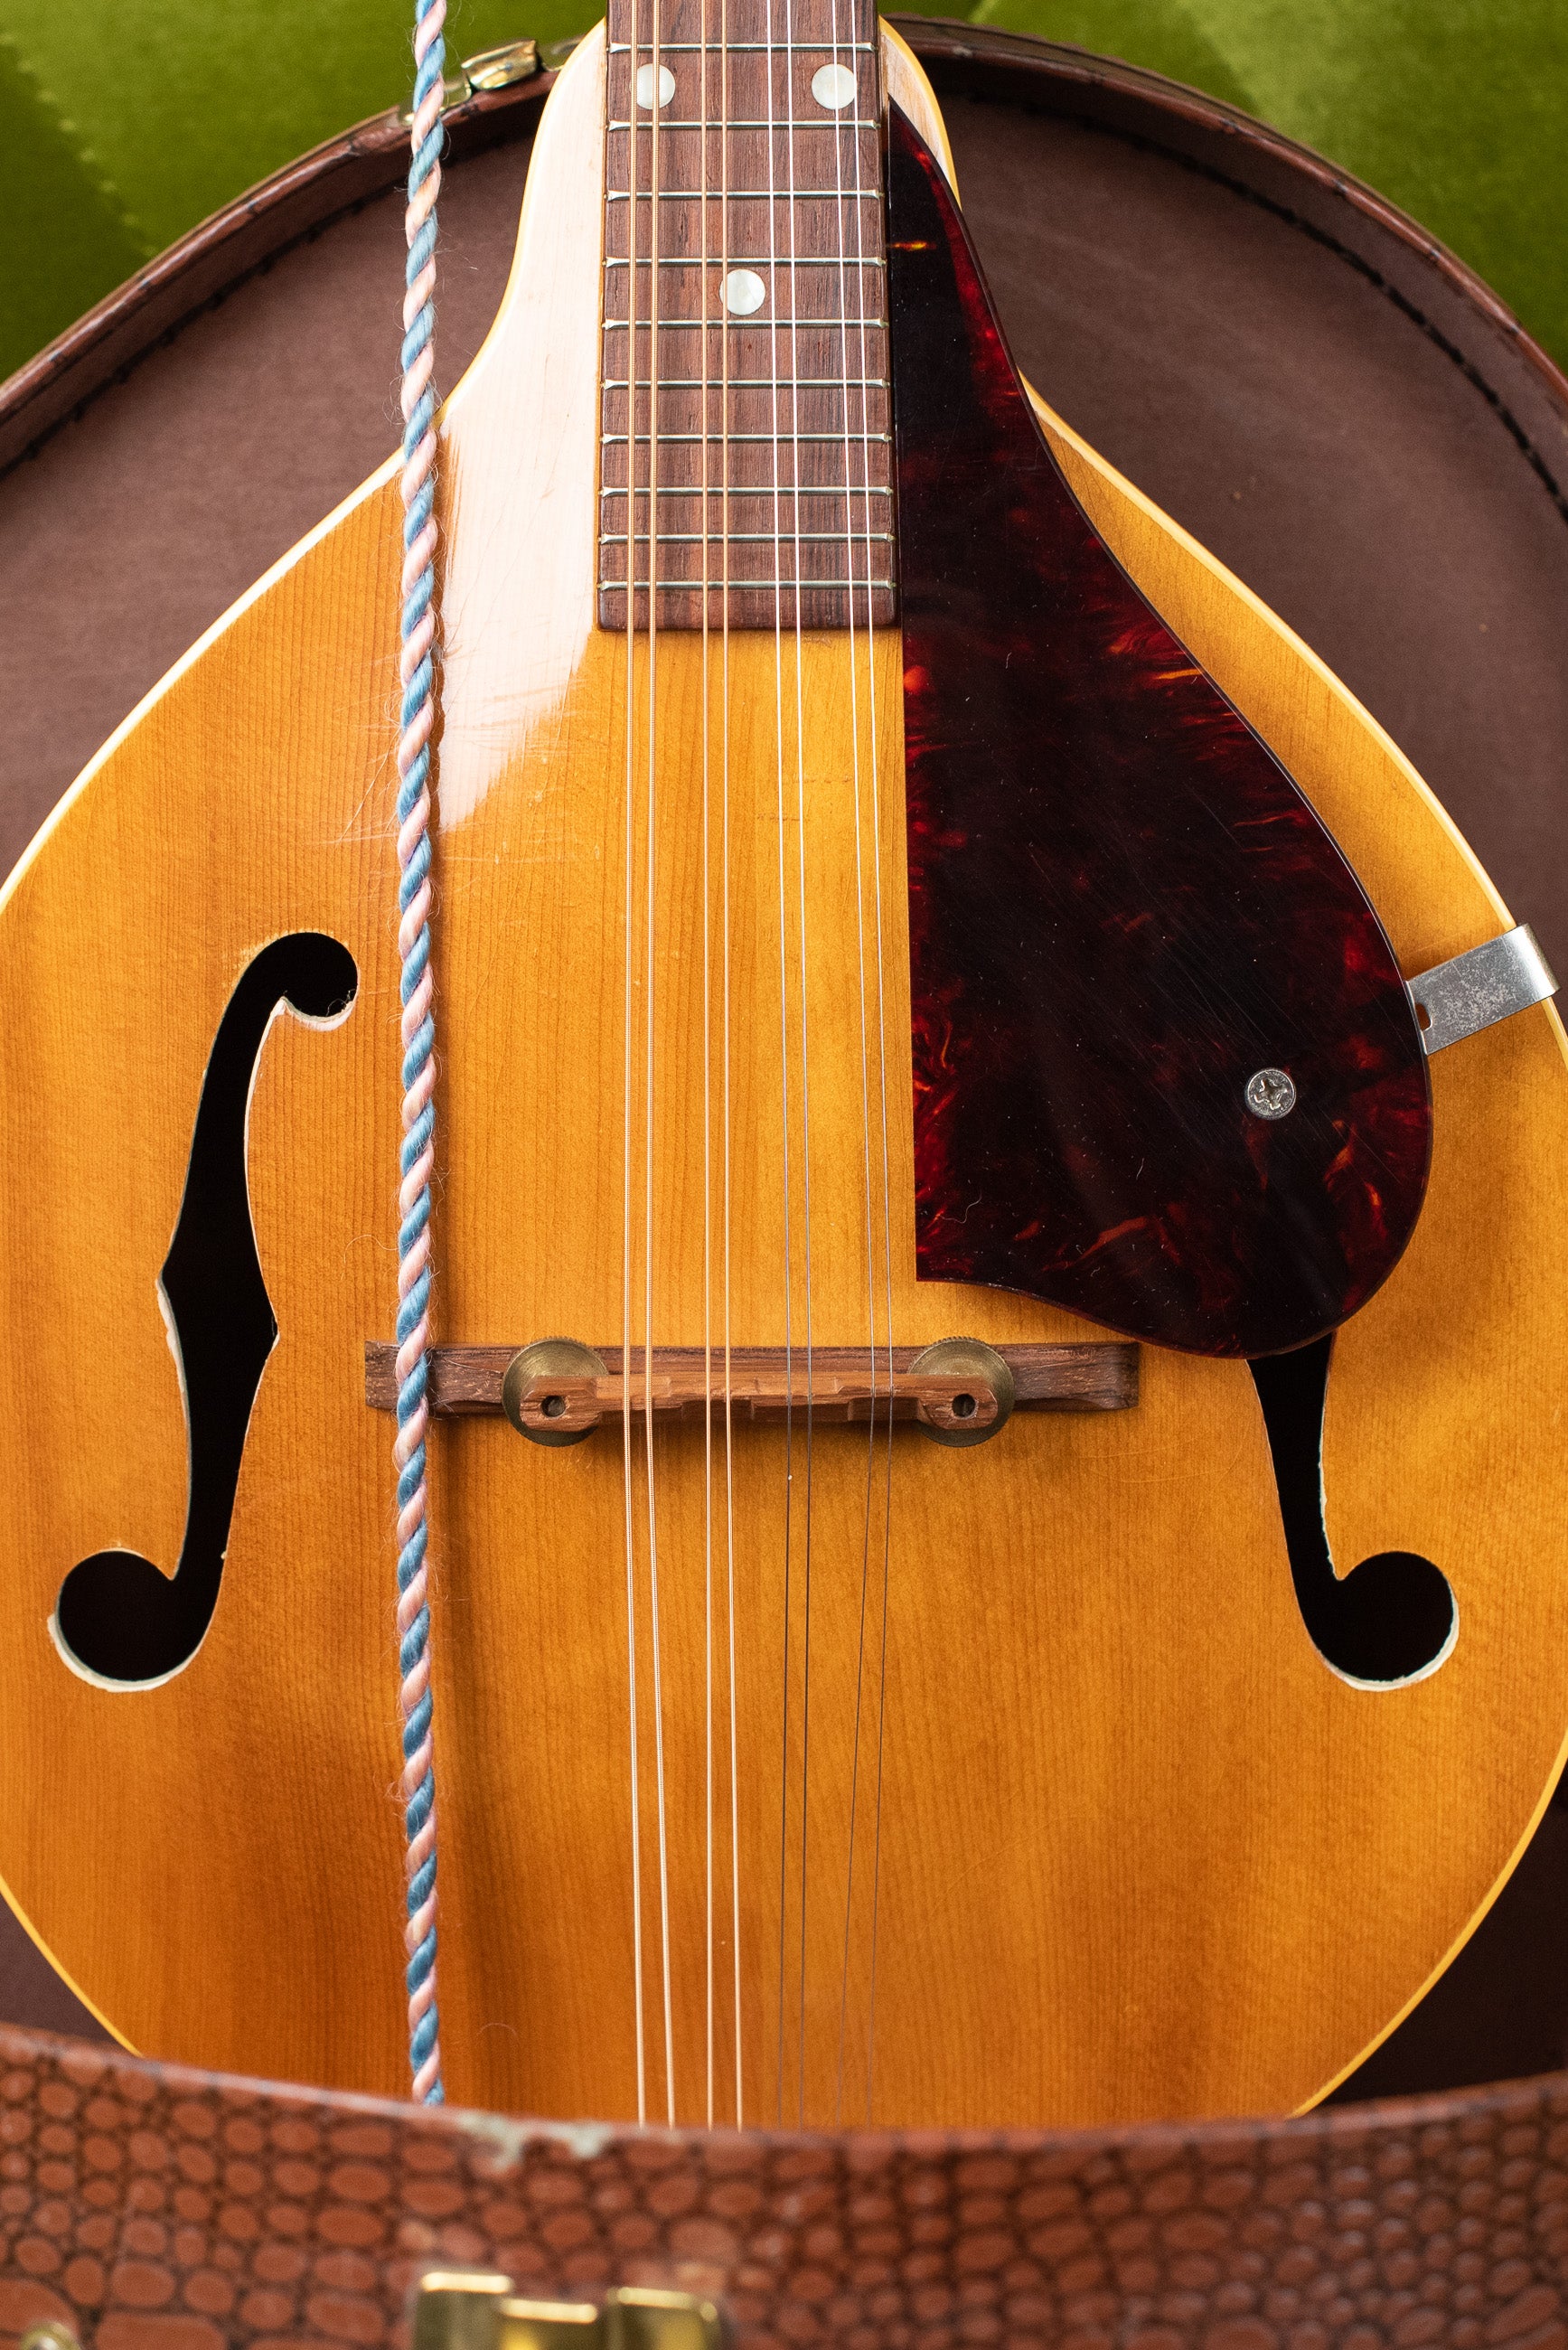 A stye Gibson mandolin 1957